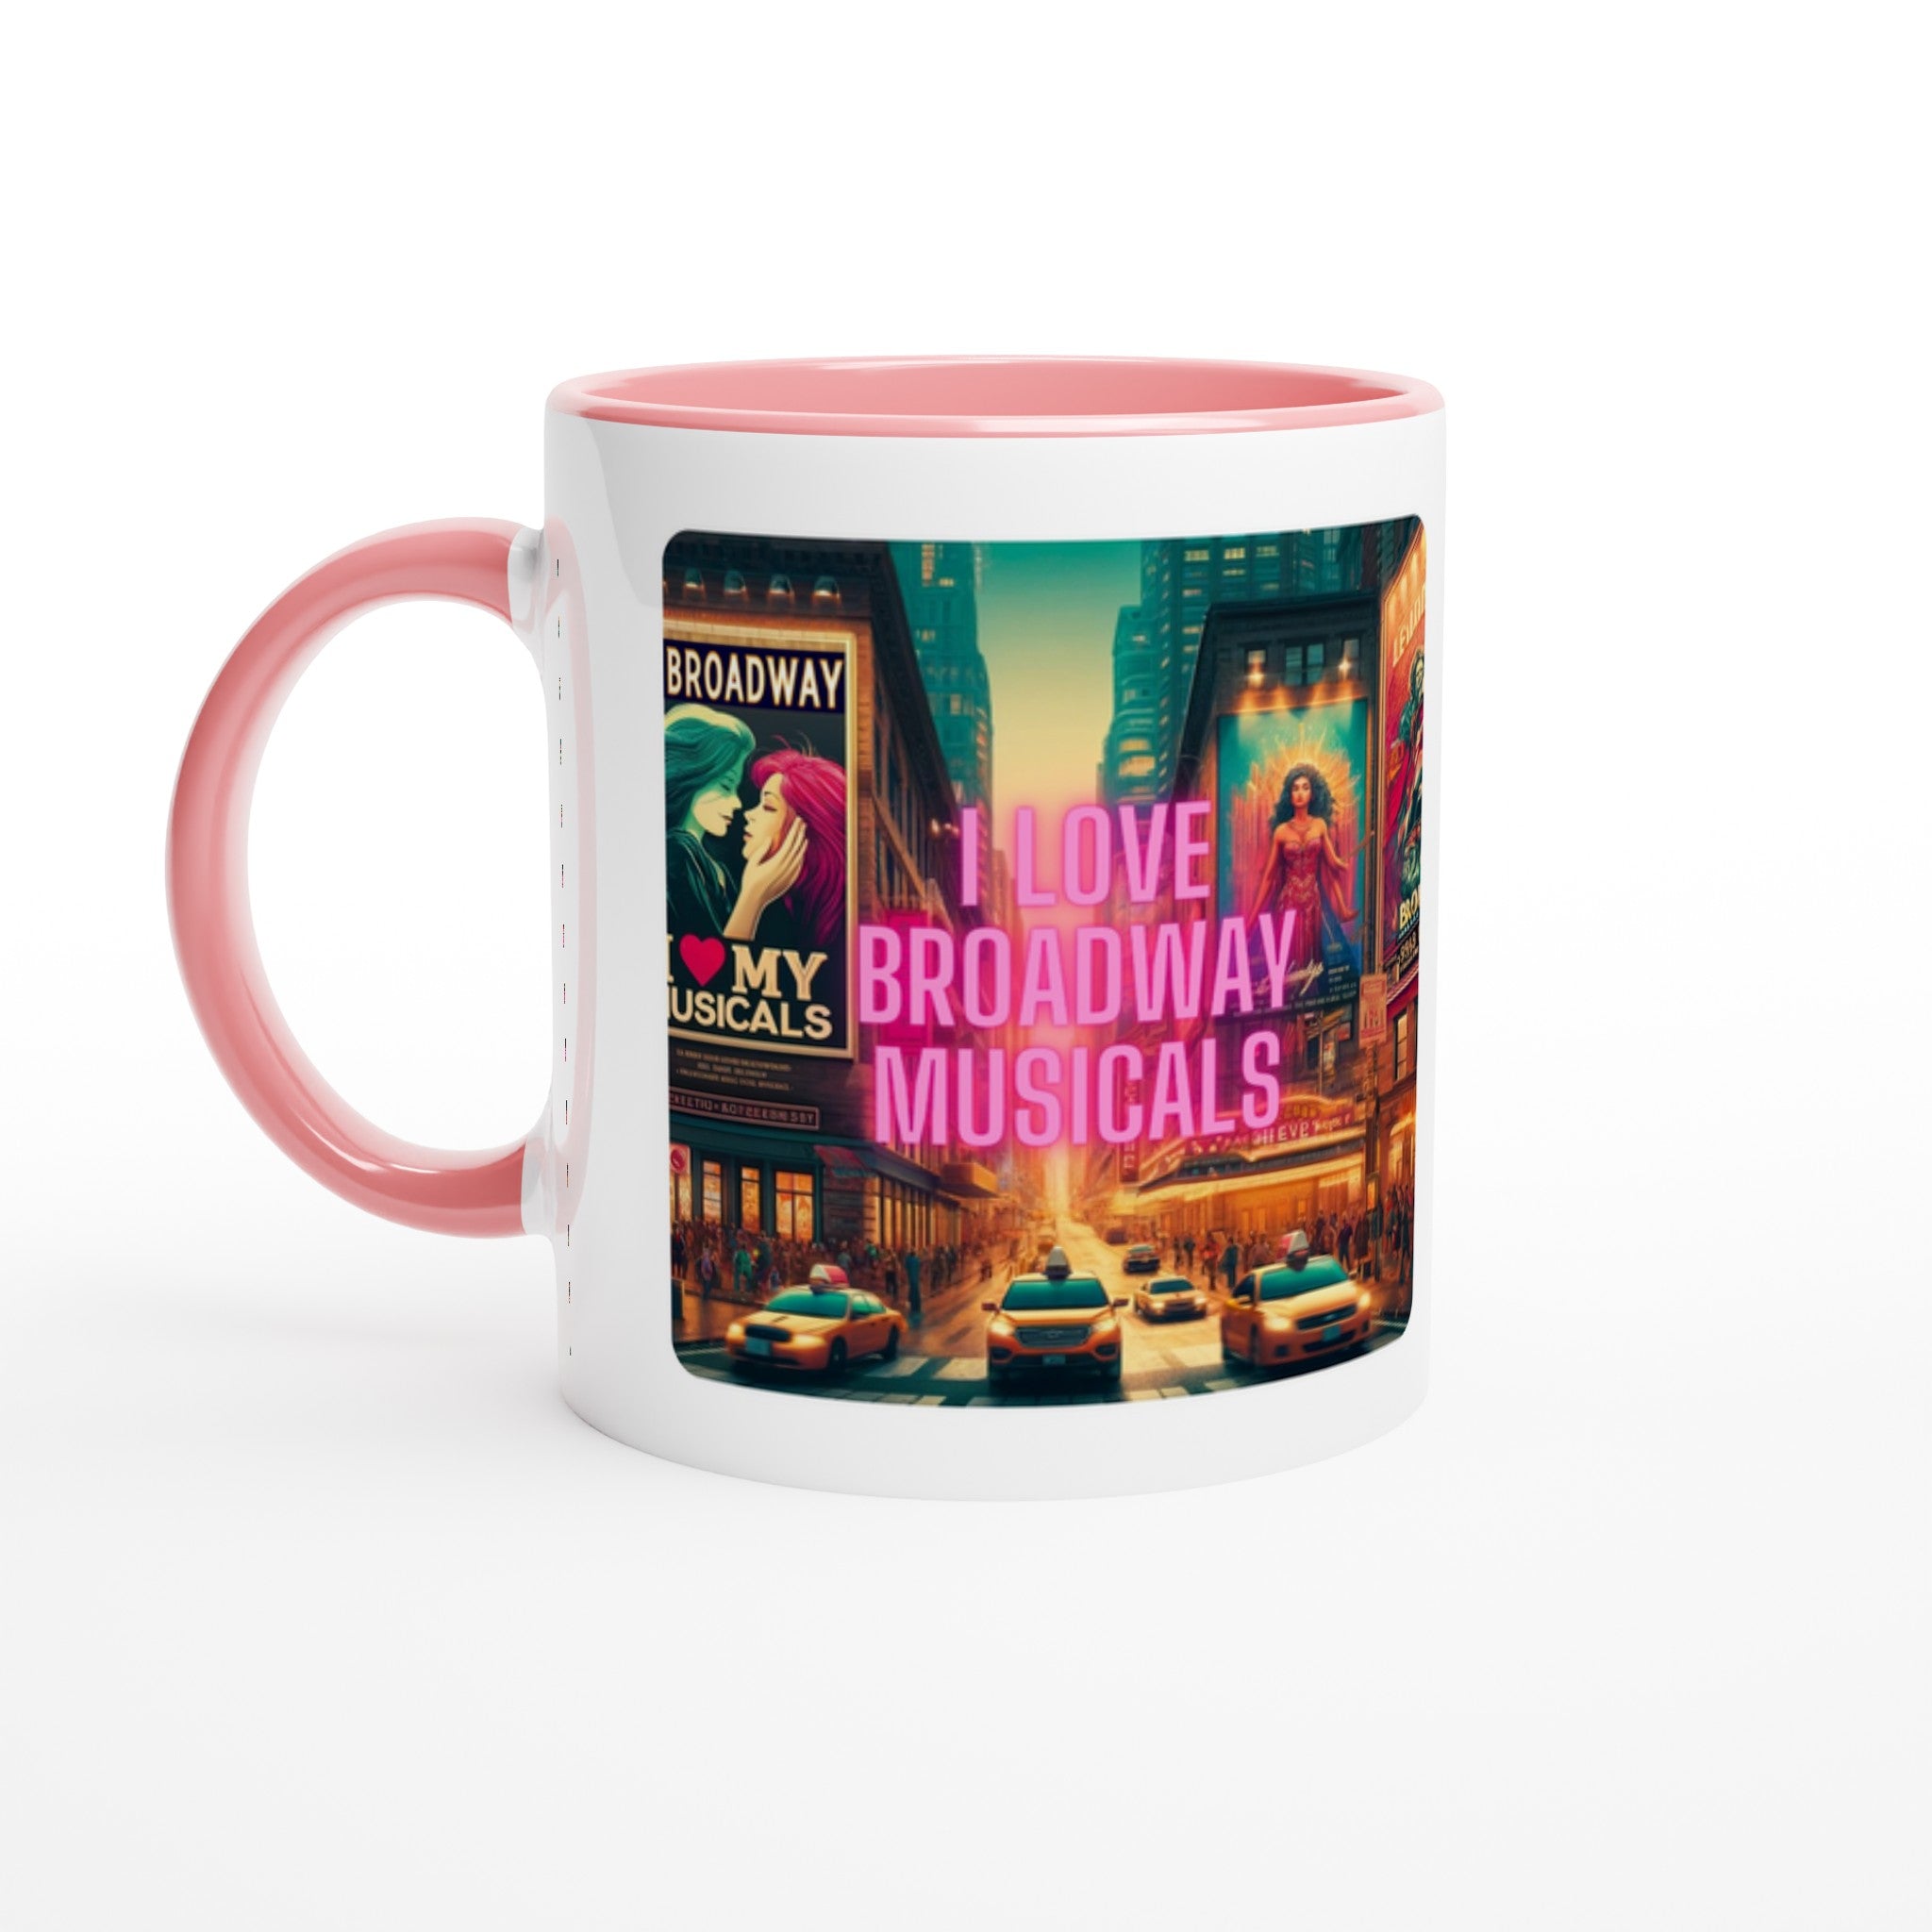 "I Love Broadway Musical" White 11oz Ceramic Mug with Color Inside